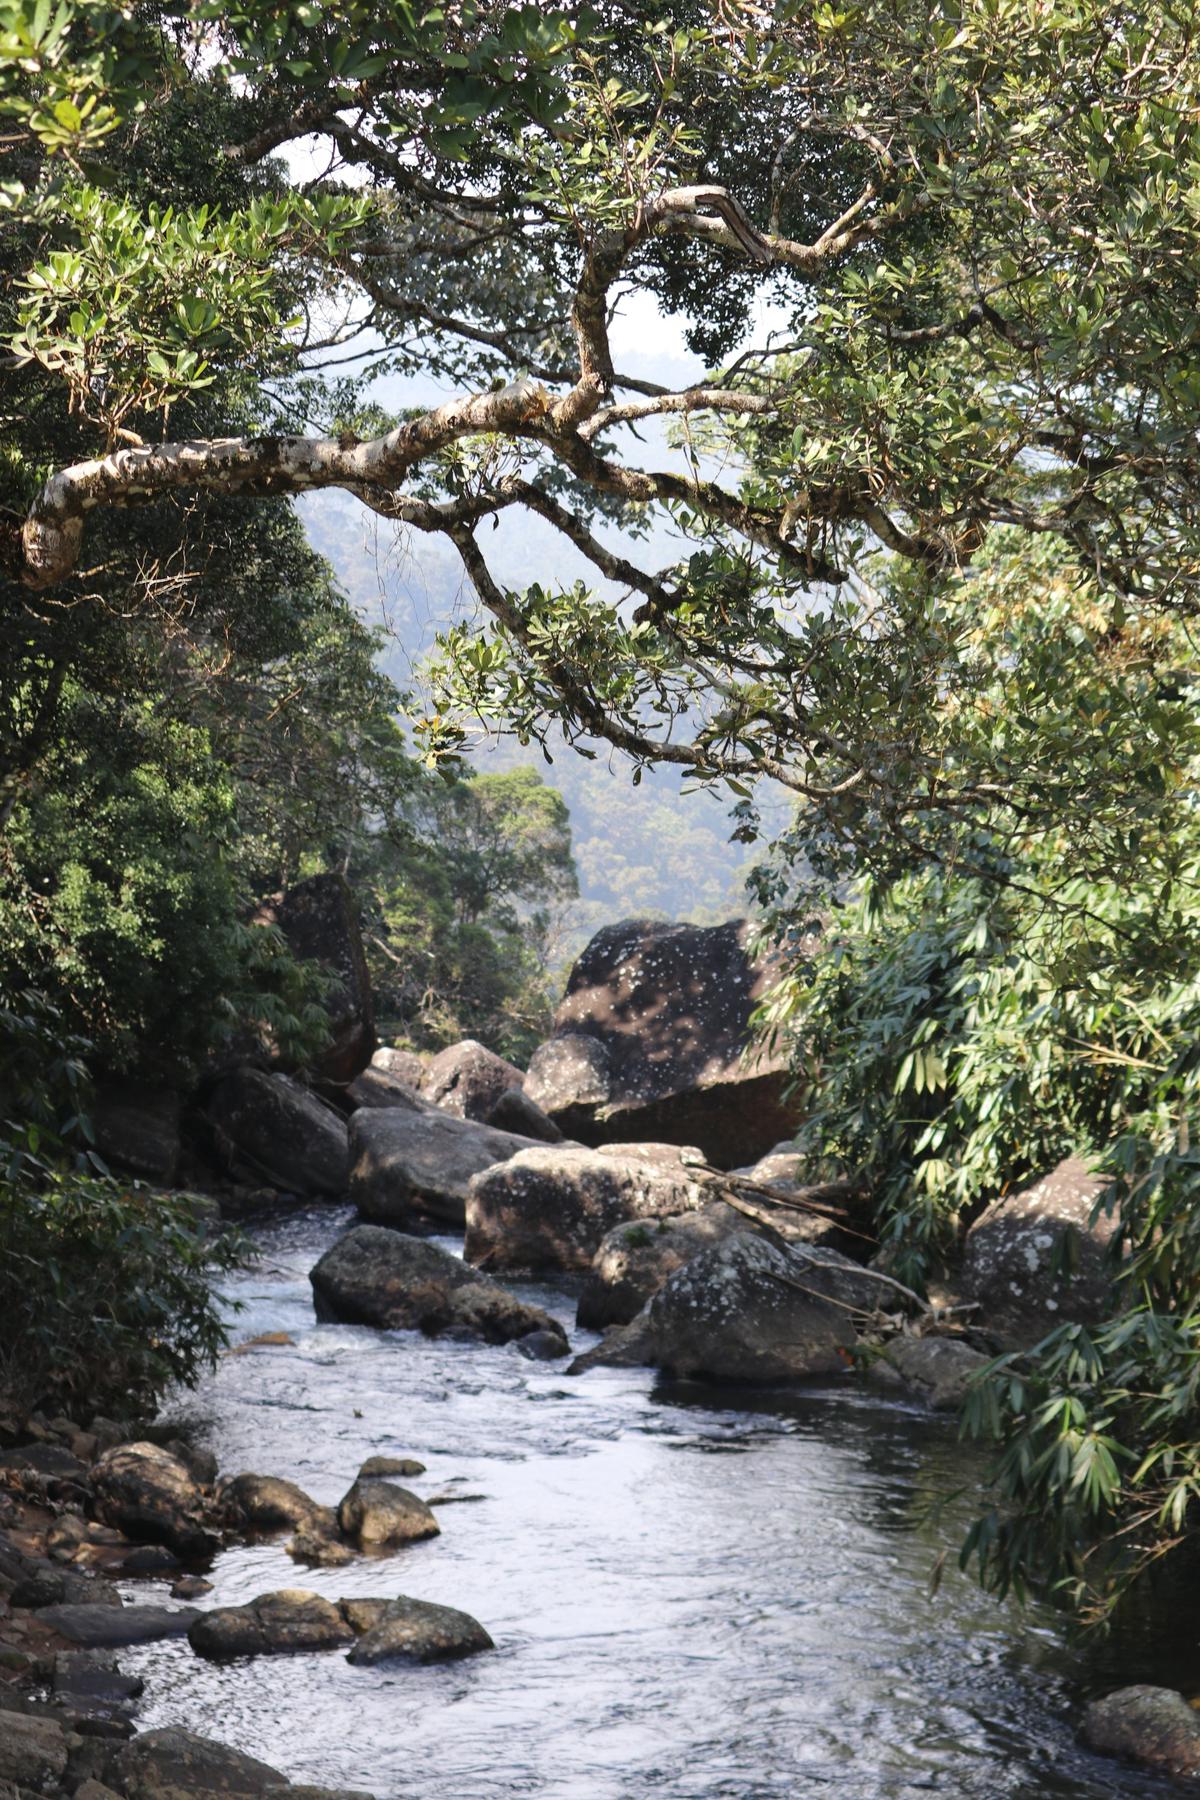 Kalakkad-Mundanthurai Tiger Reserve